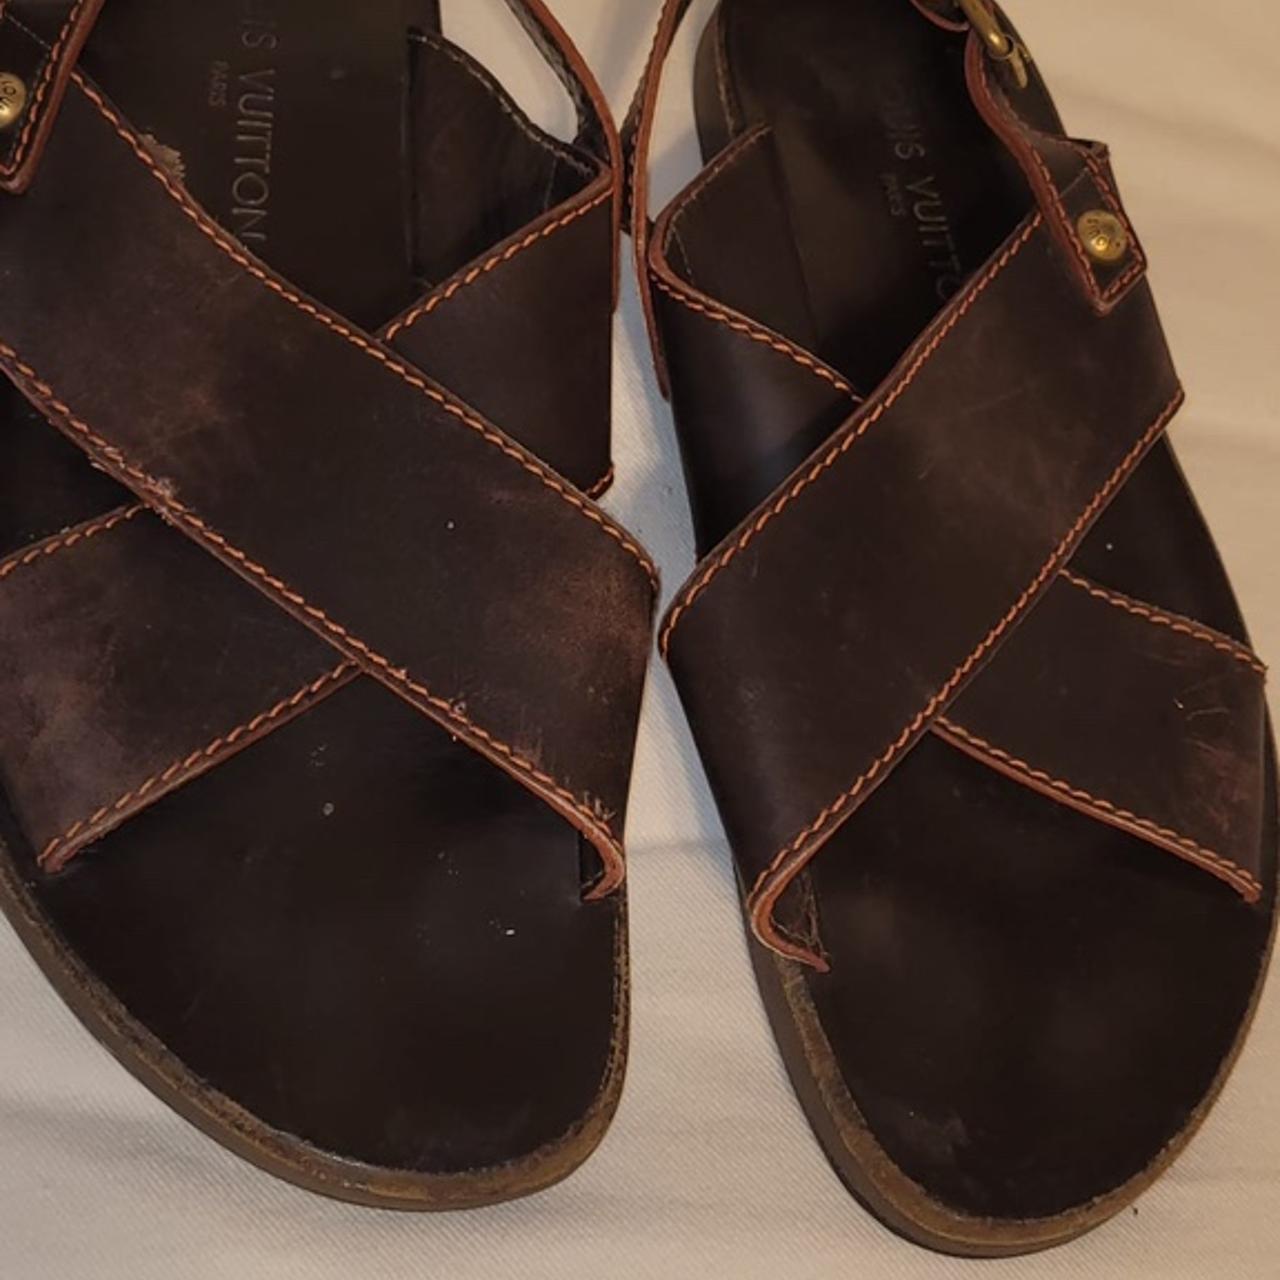 Louis Vuitton lv man shoes leather slides slippers sandals